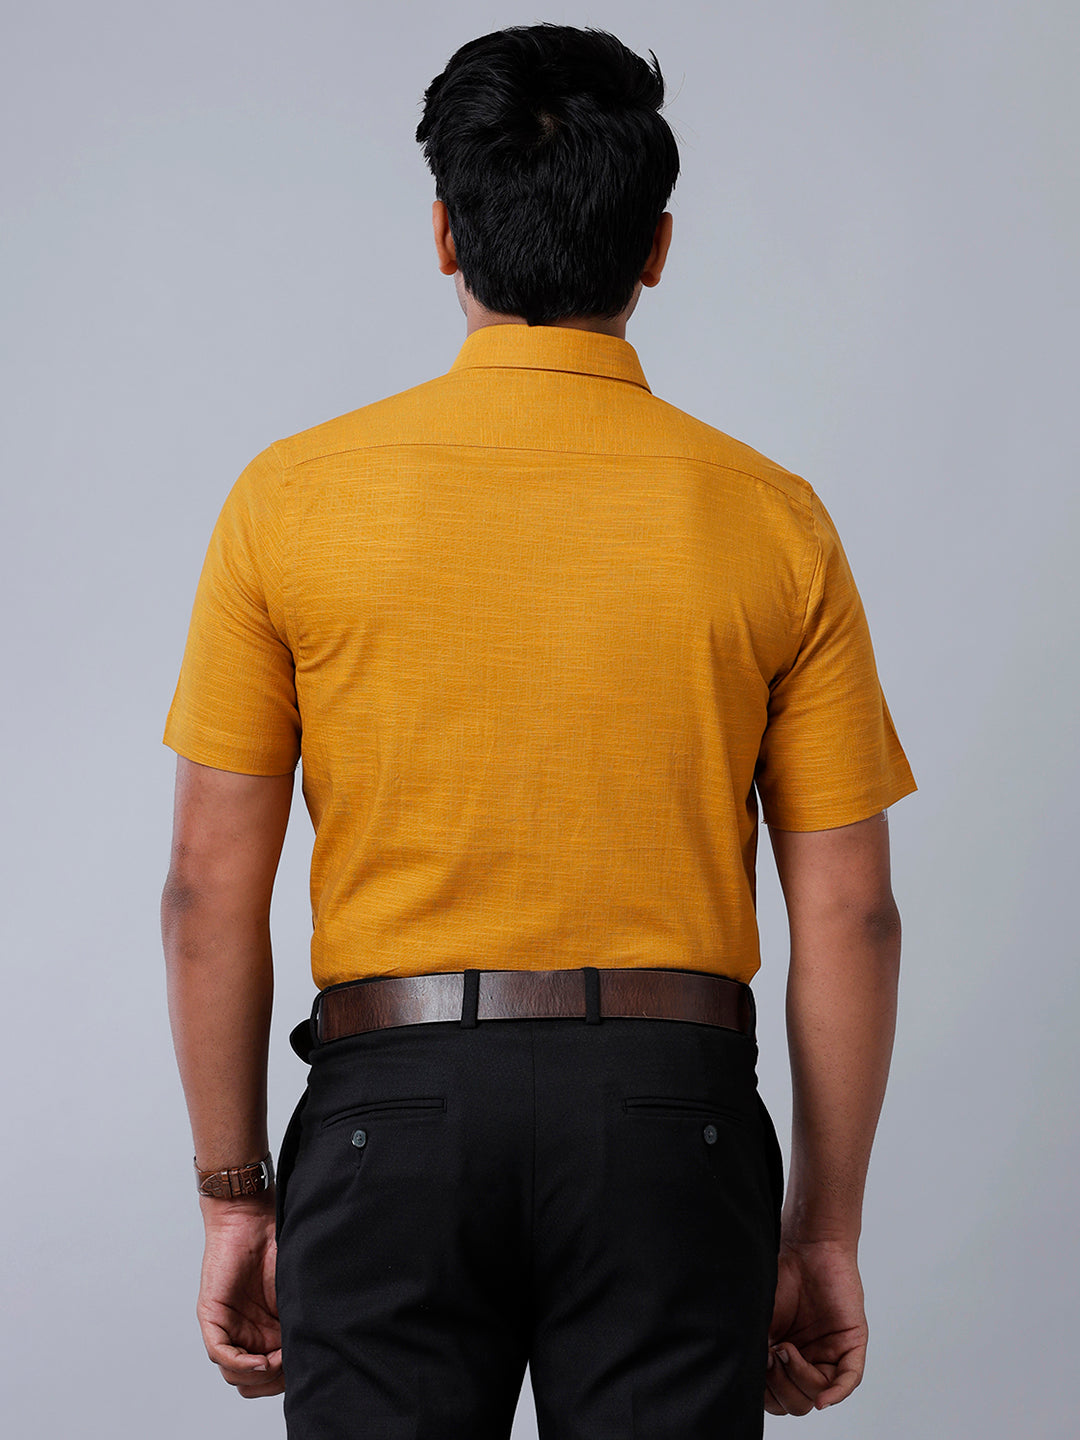 Mens Formal Shirt Half Sleeves Yellowish Brown CL2 GT32-Back view